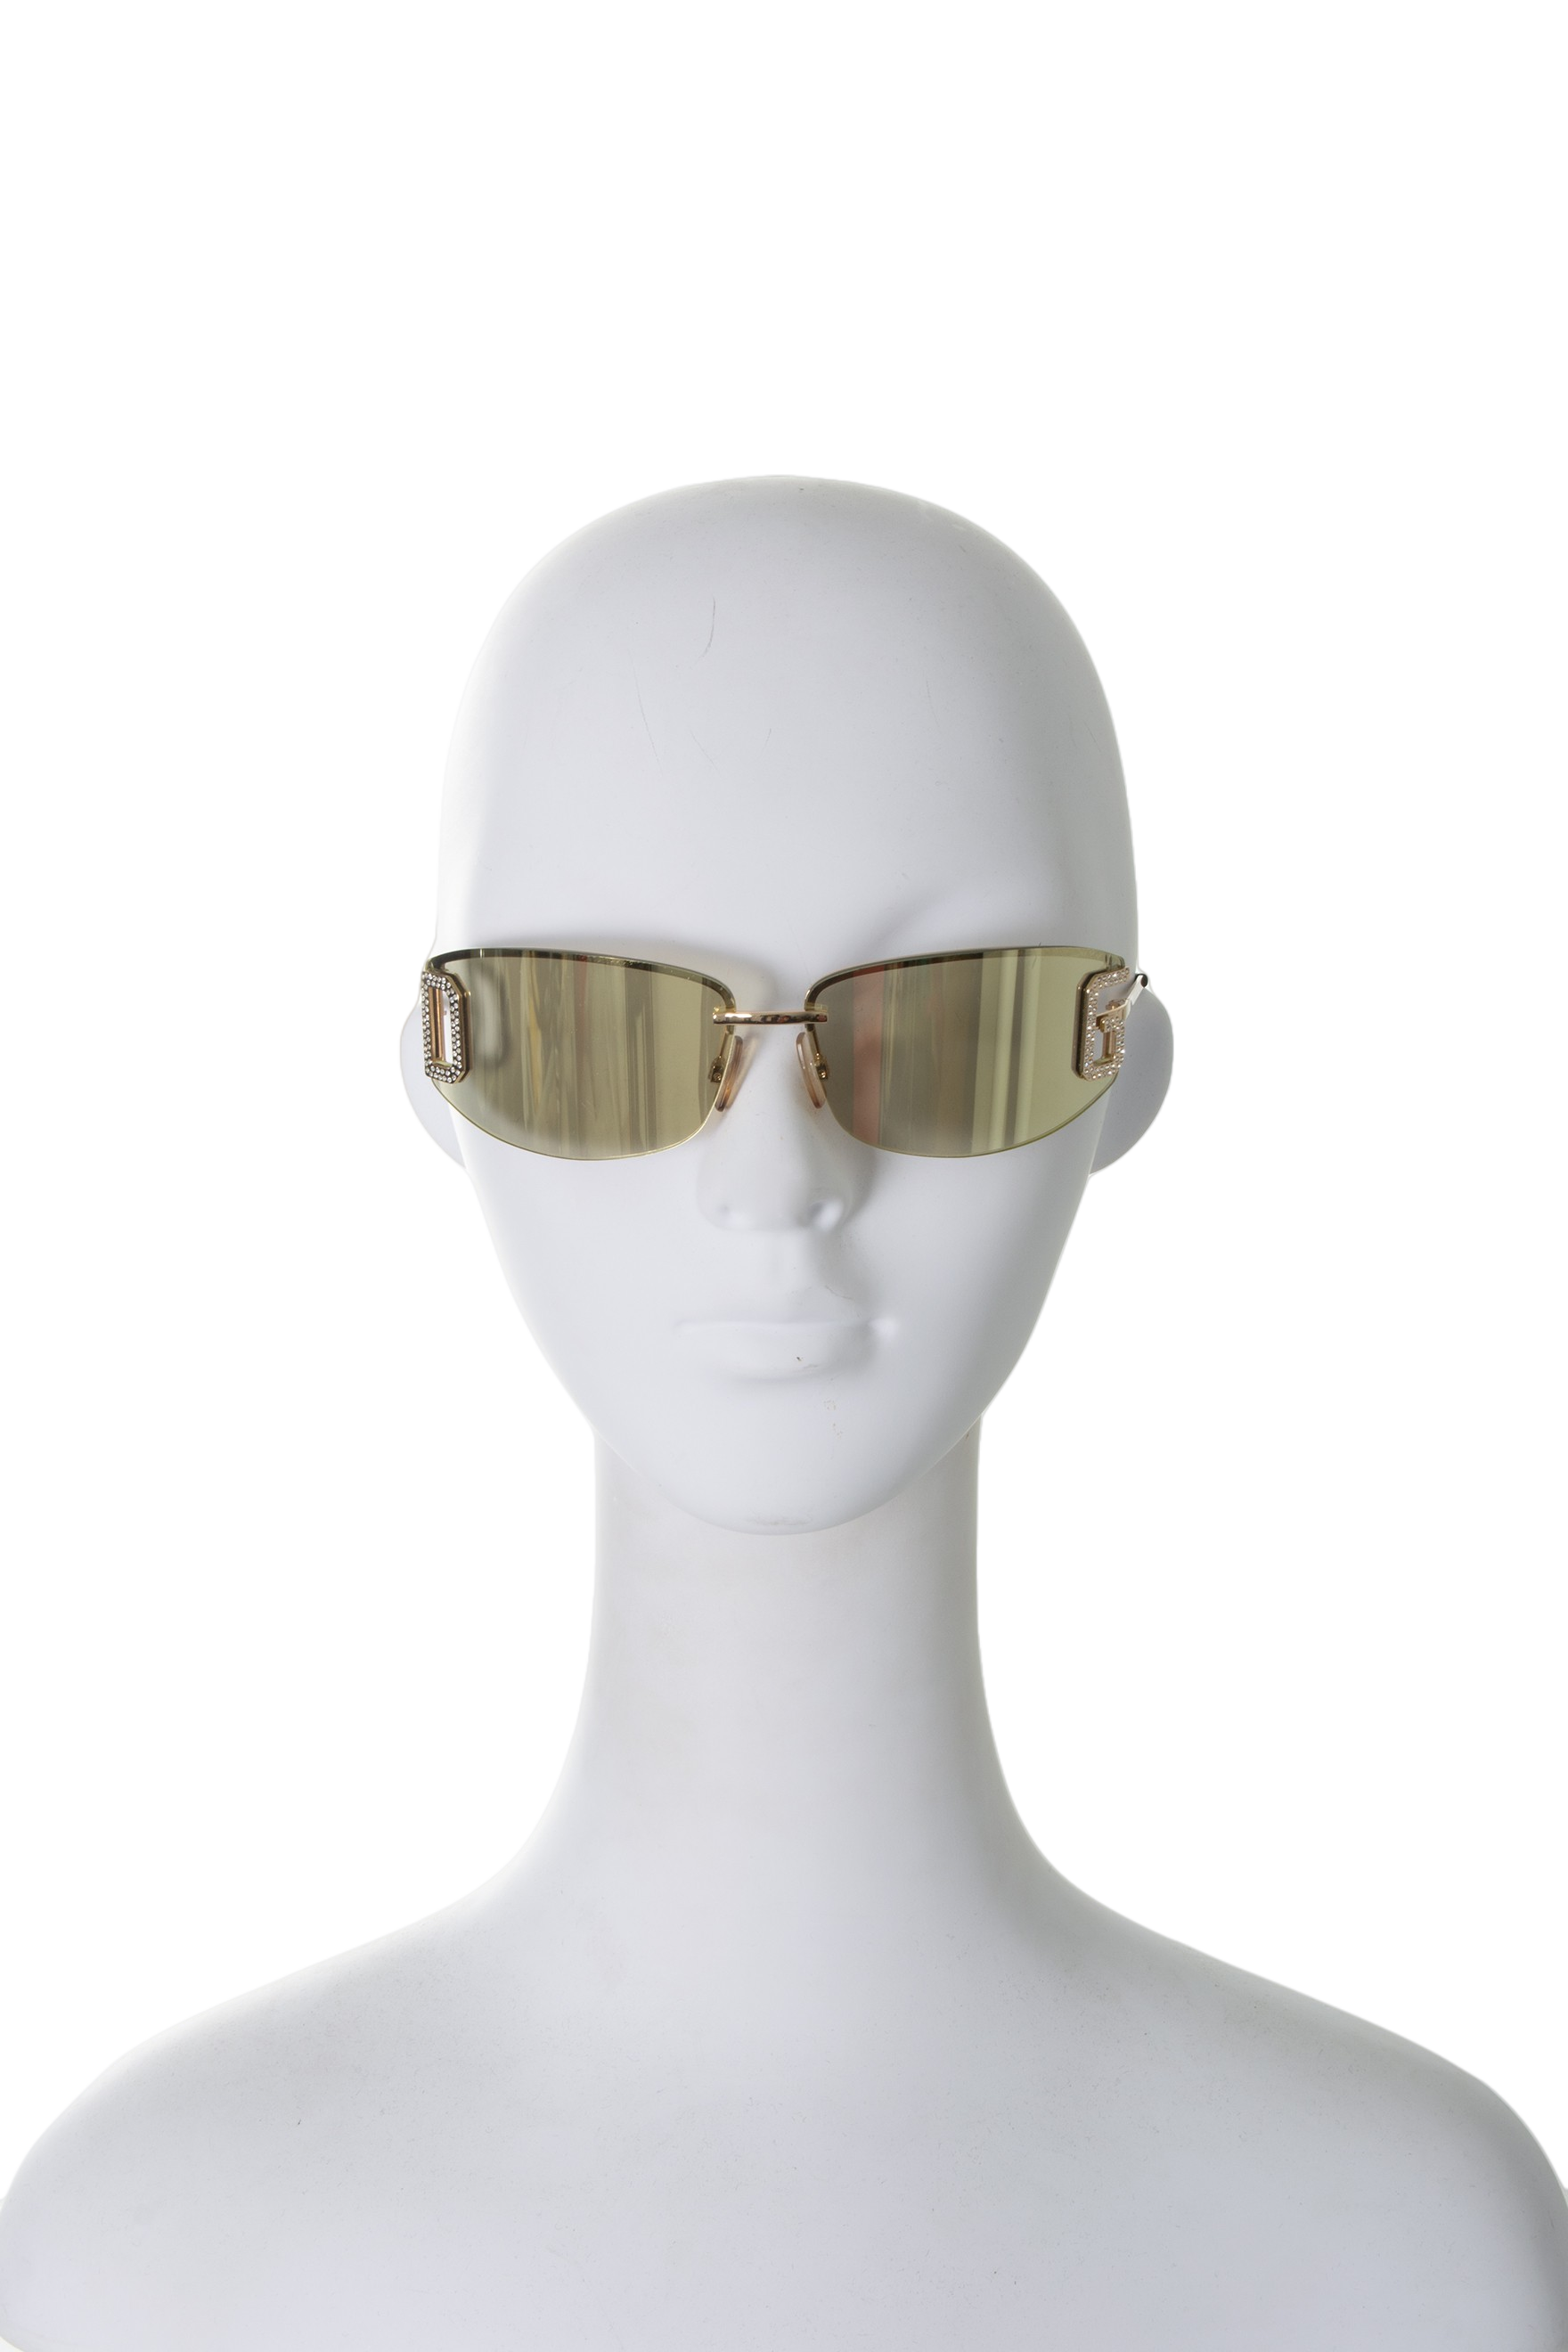 Shop Irvrsbl - Chanel Swarovski crystal sunglasses. All of these